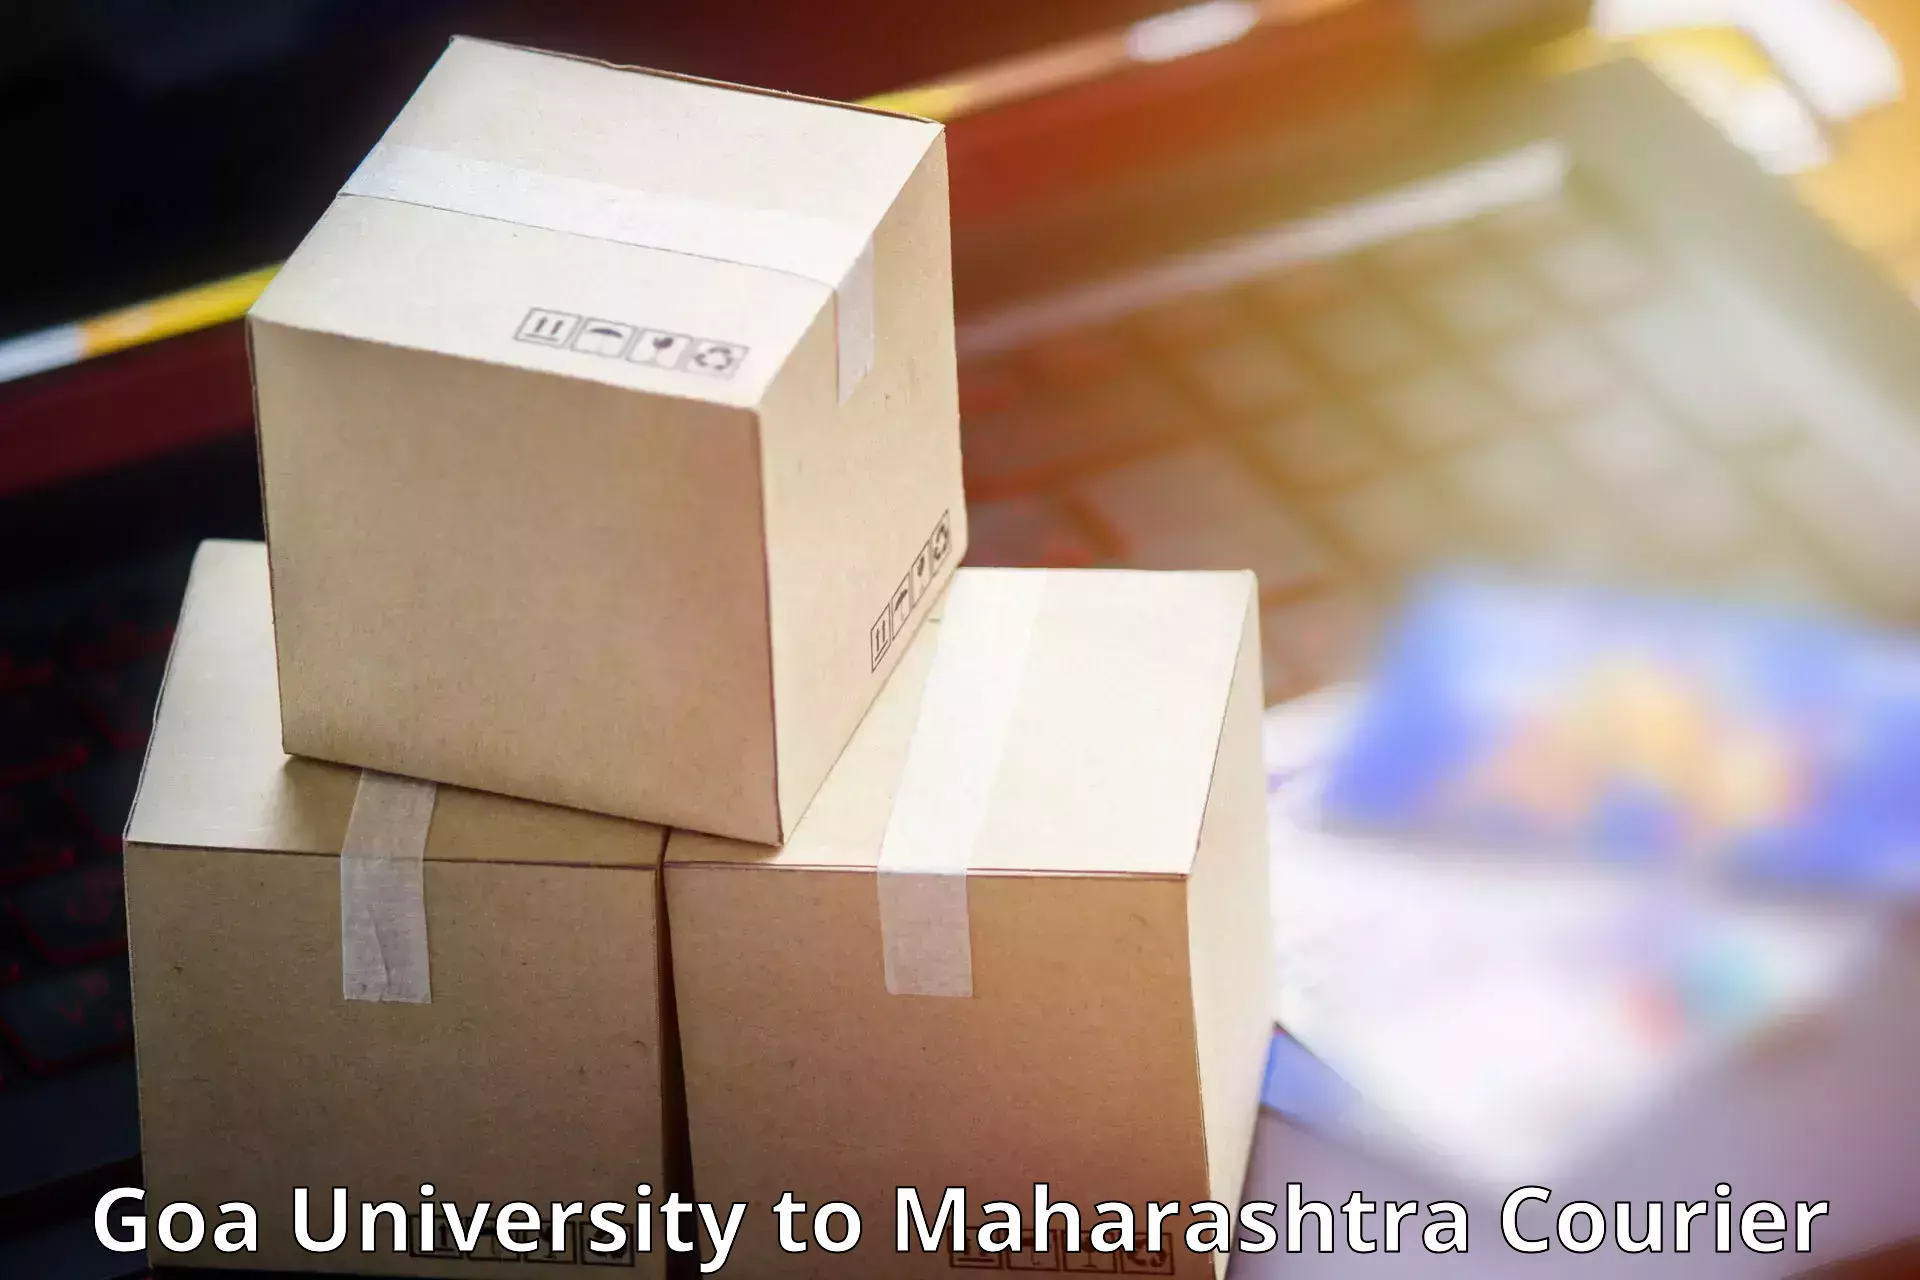 Global freight services Goa University to Savitribai Phule Pune University